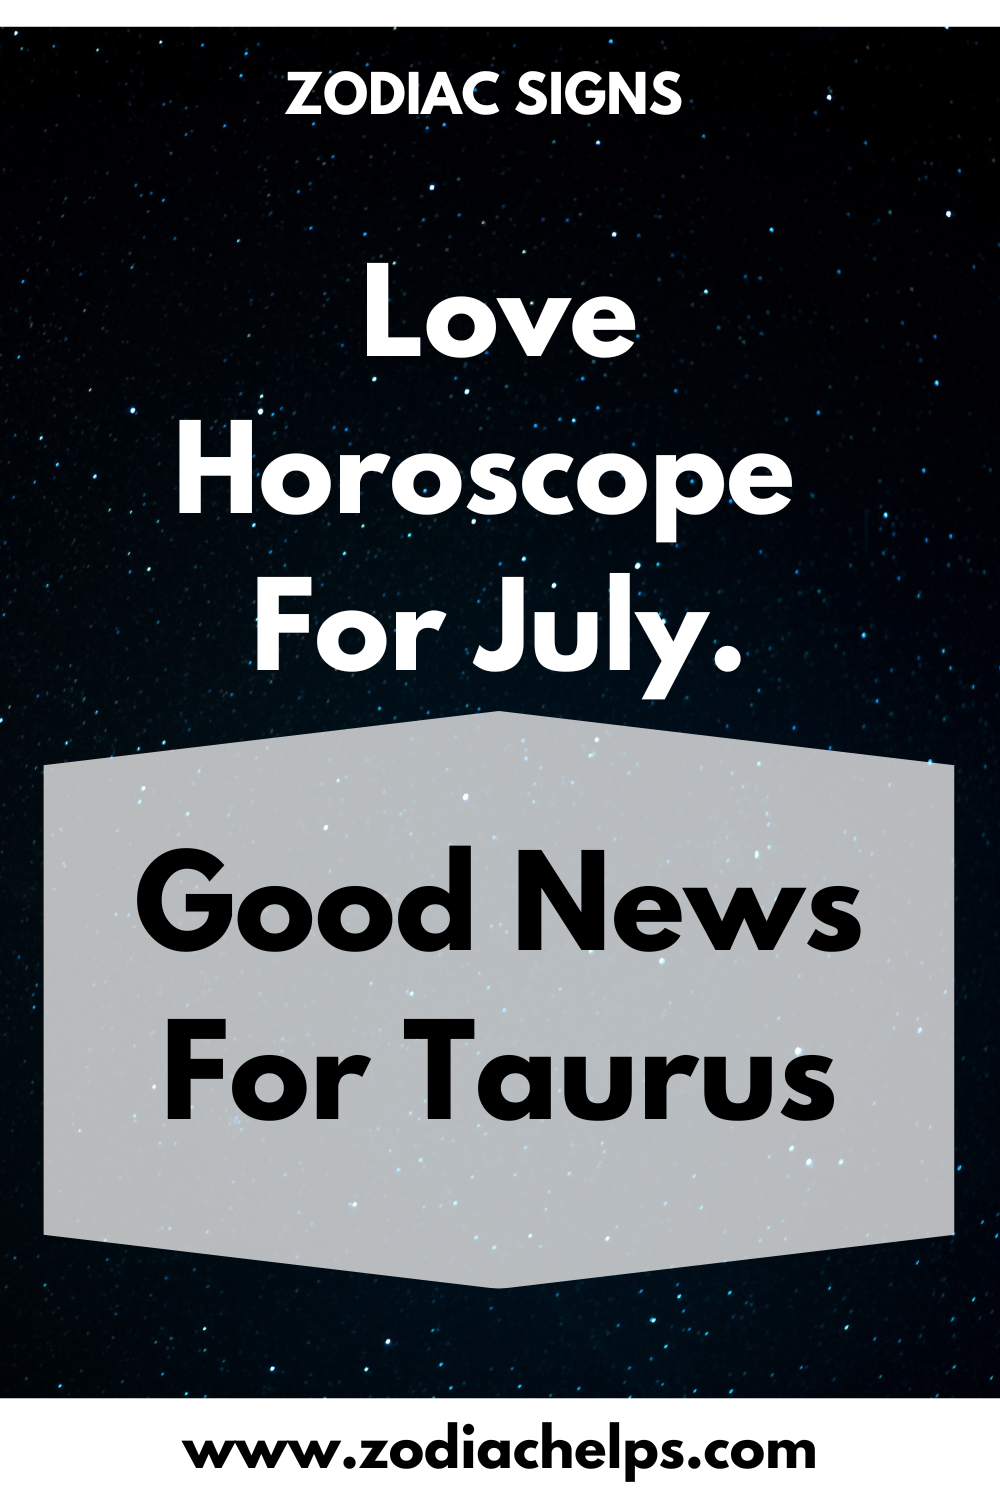 Love Horoscope For July. Good News For Taurus